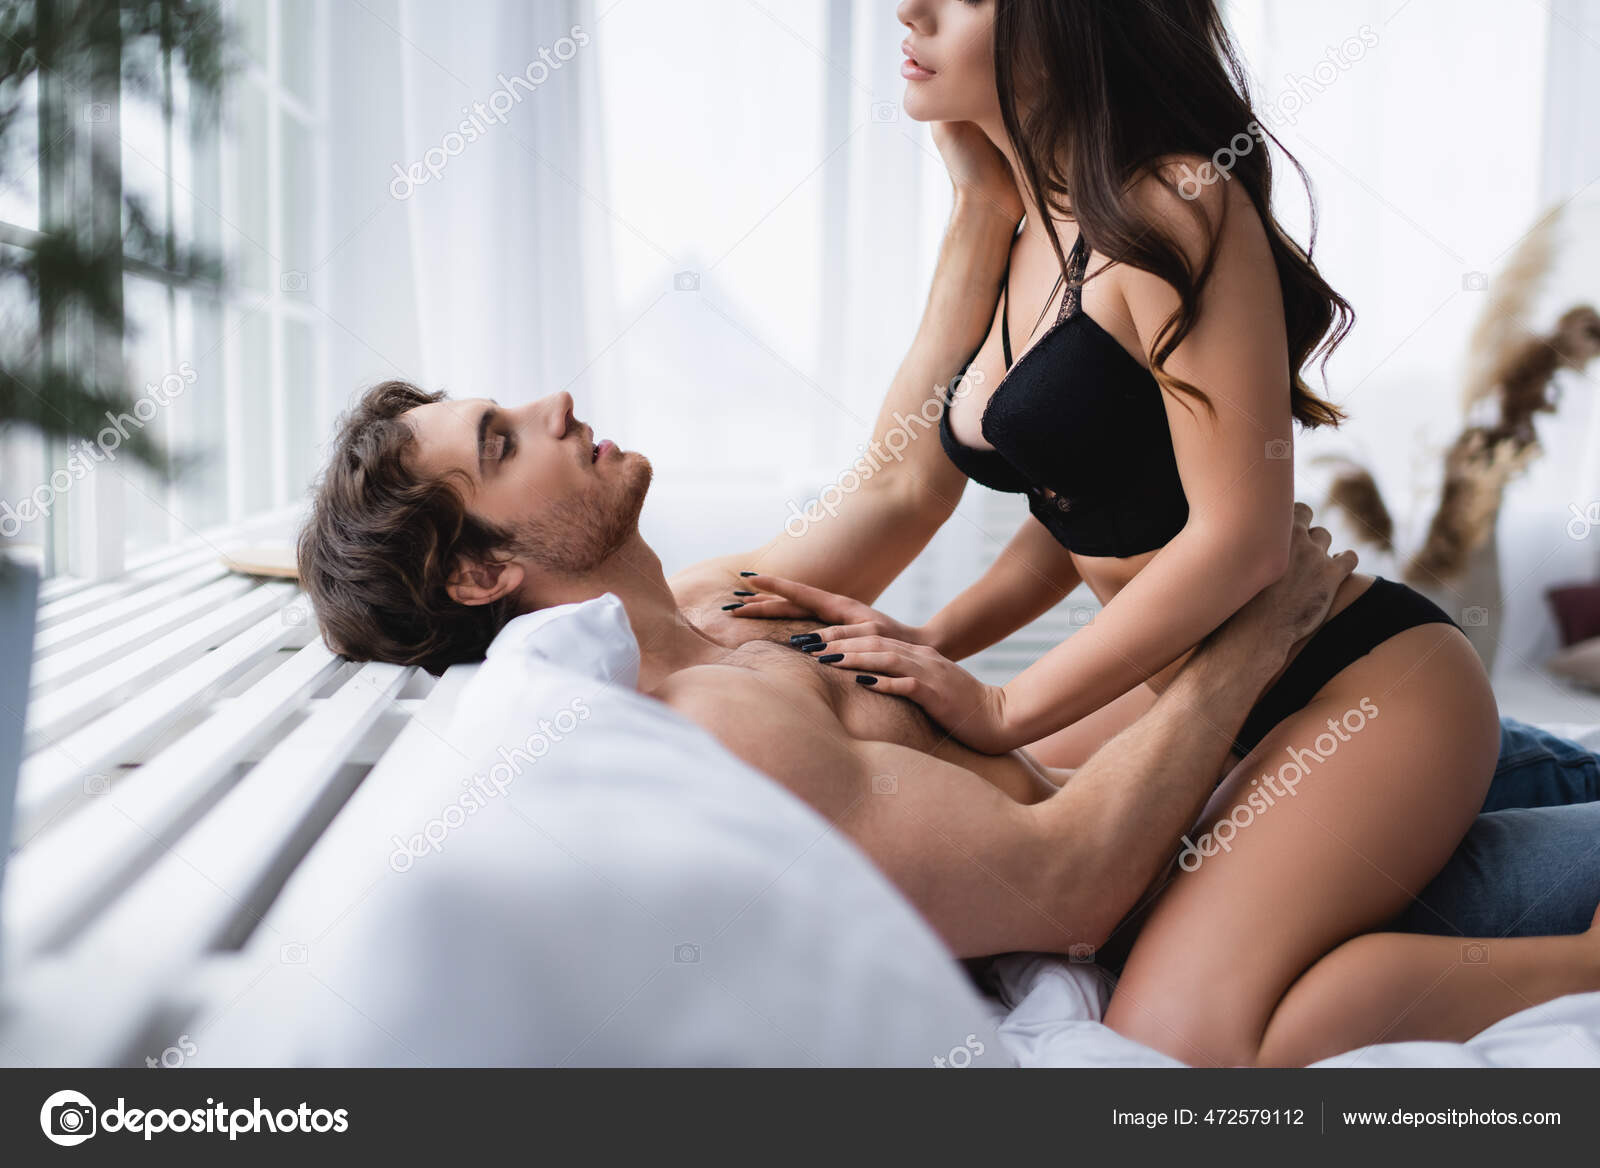 erotic photography of girlfriends